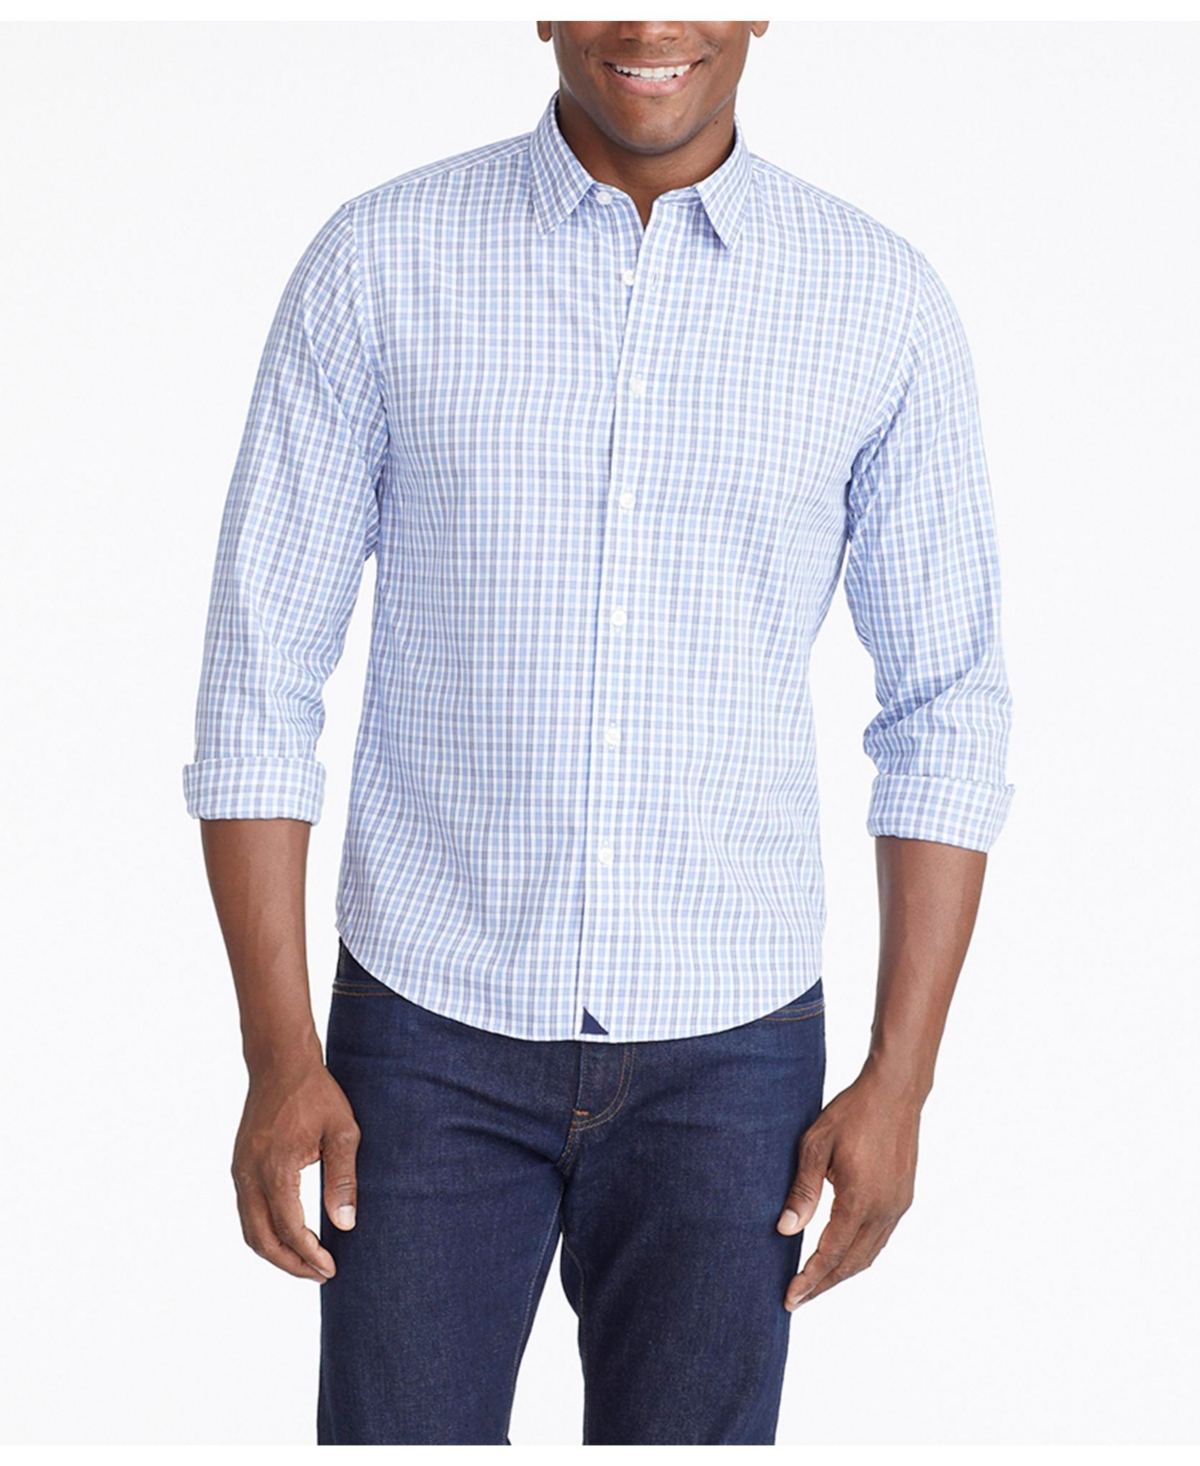 Untuck it Men's Slim Fit Wrinkle-Free Durif Button Up Shirt - Blue